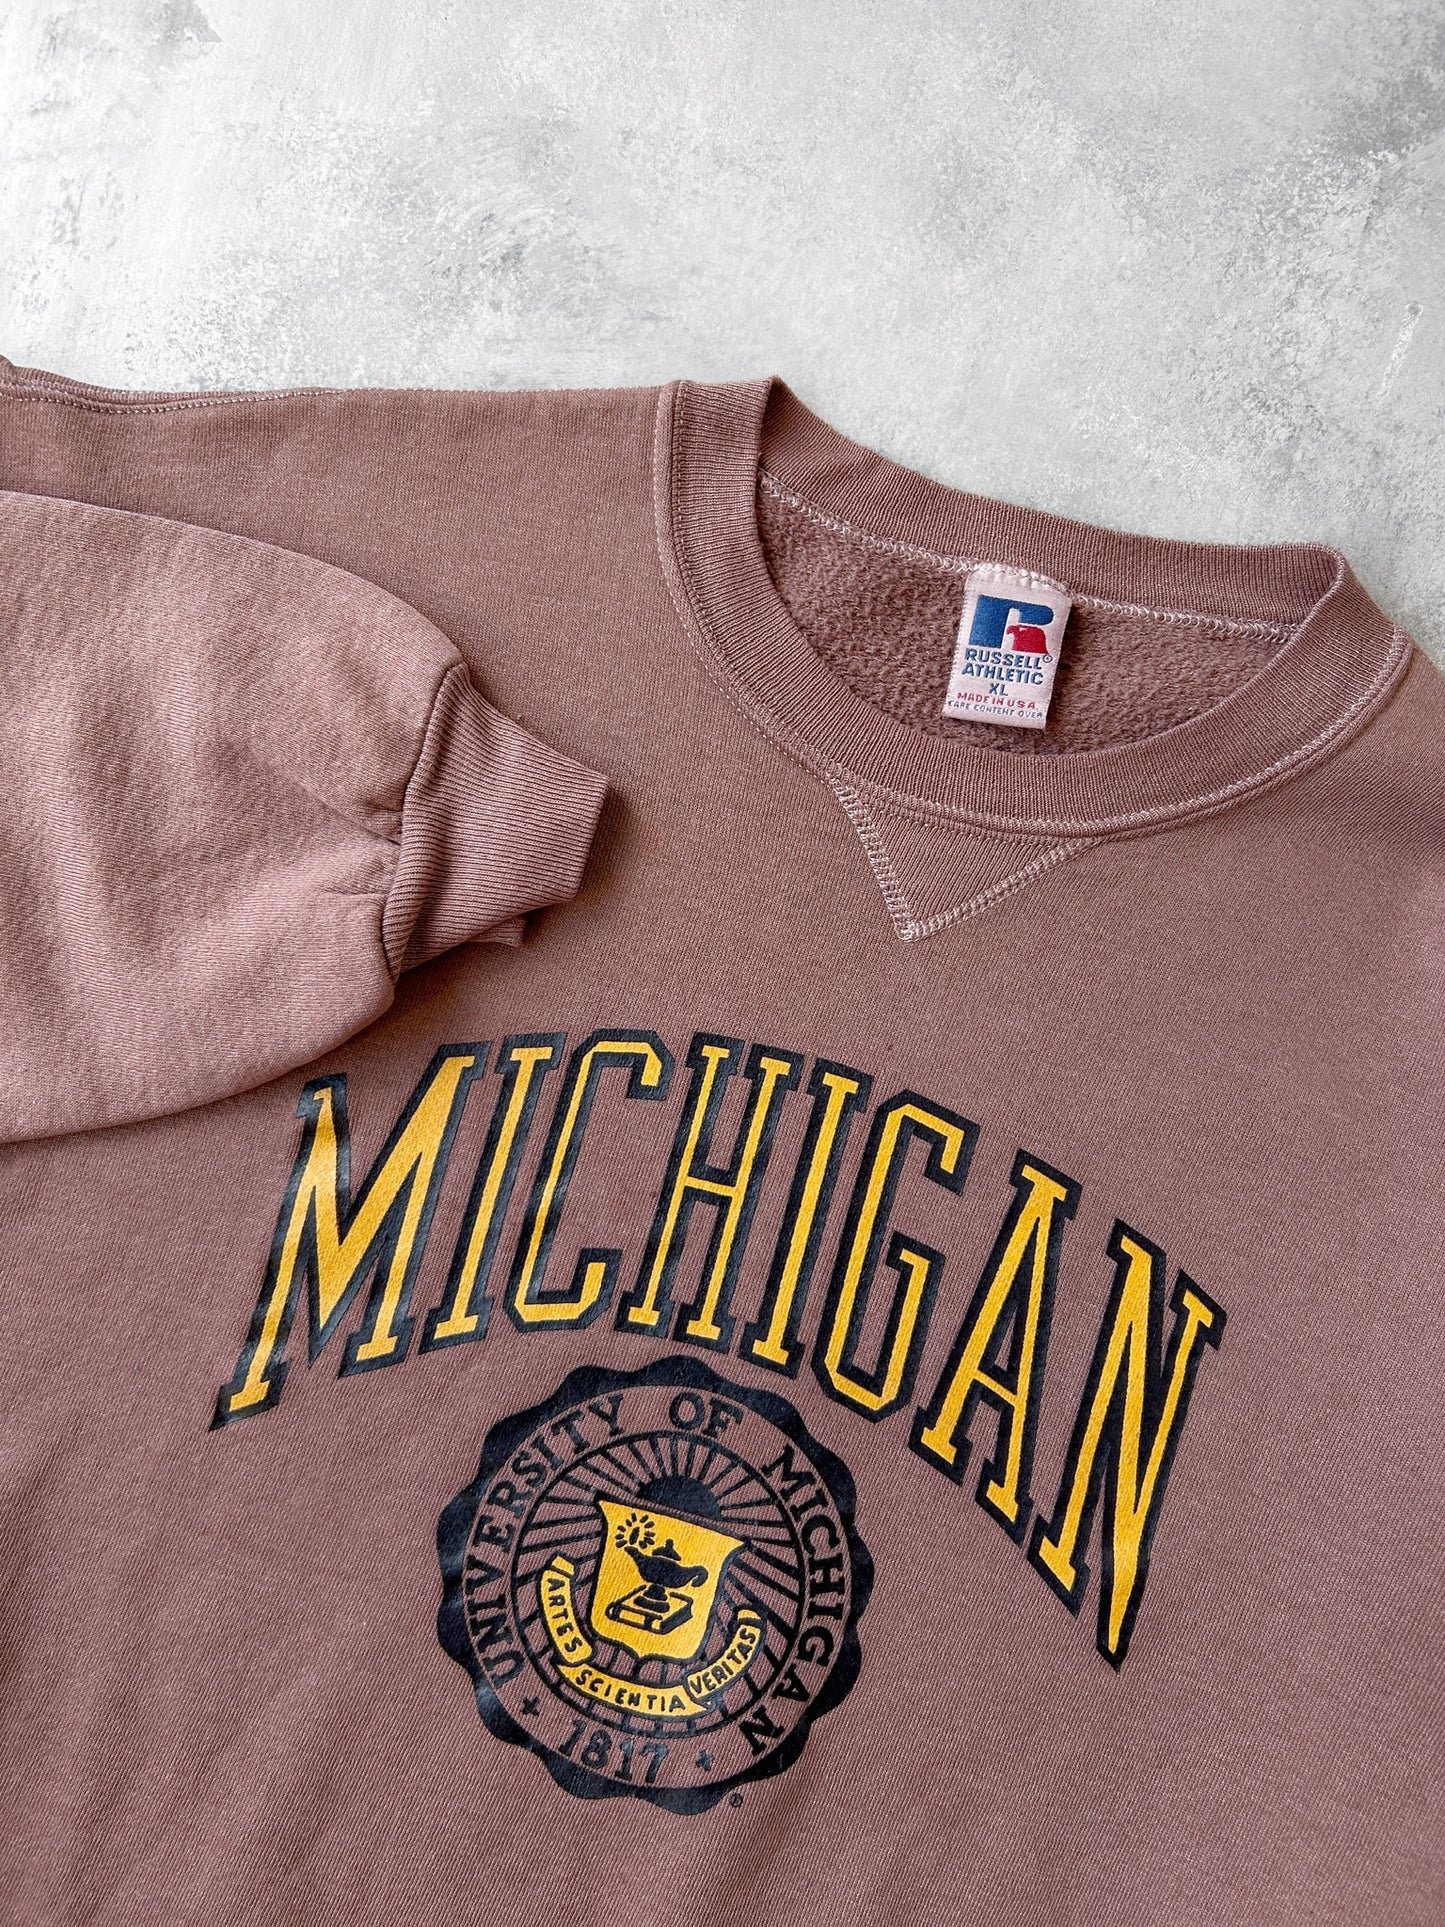 Overdyed University of Michigan Sweatshirt 90's - Large